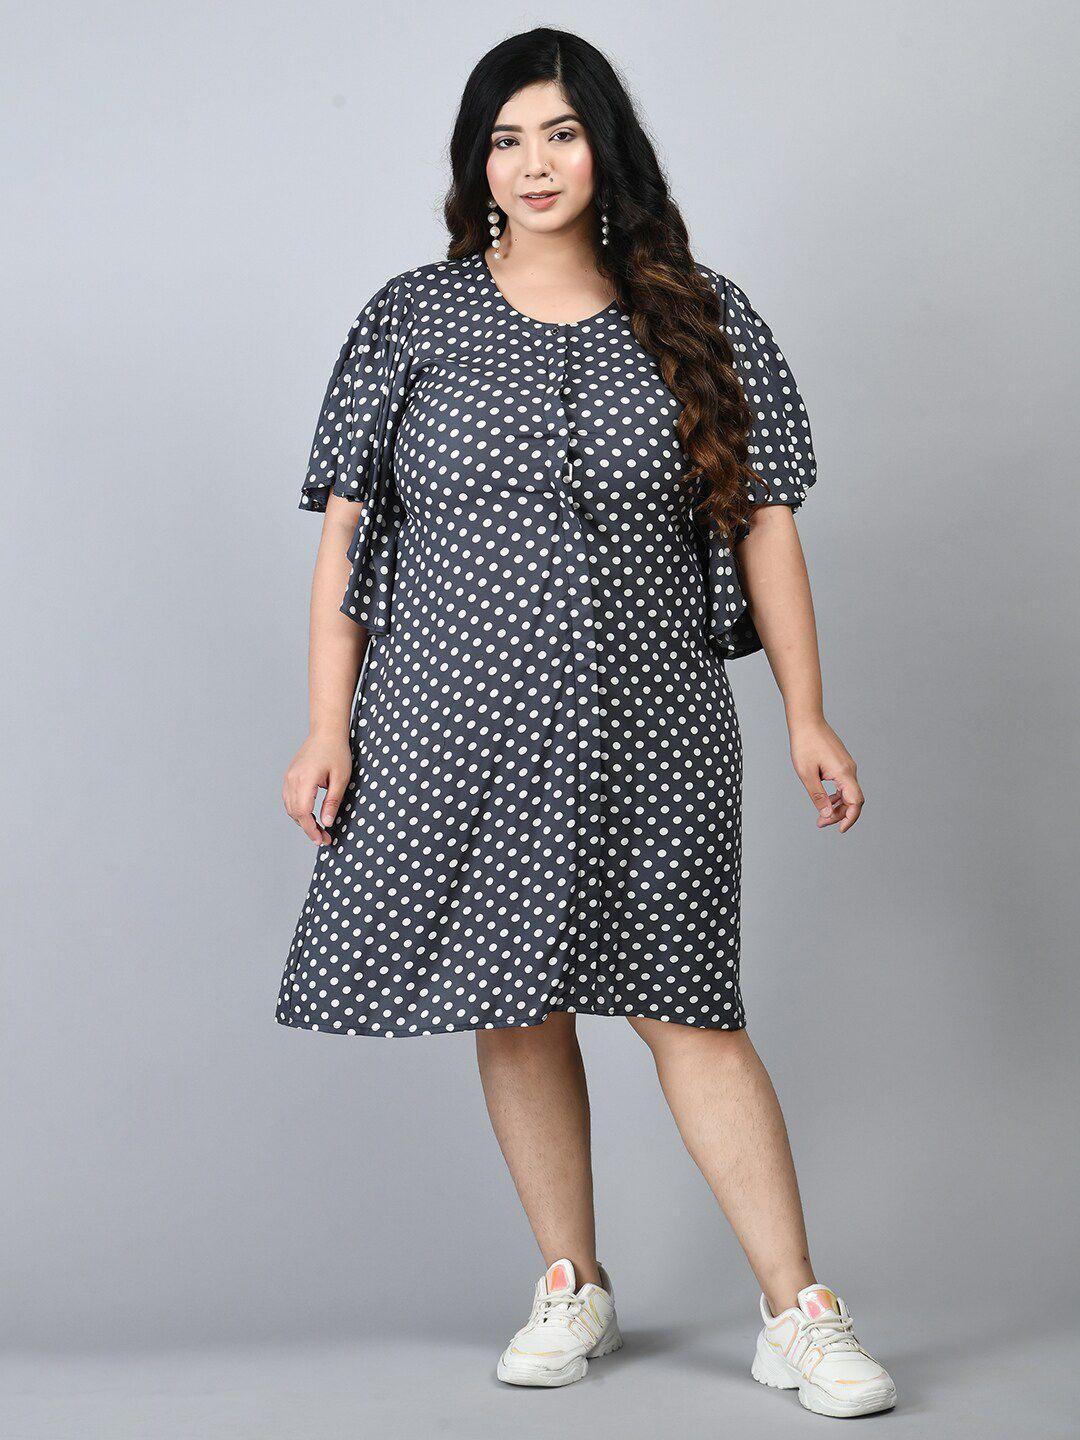 prettyplus by desinoor com plus size grey a-line dress